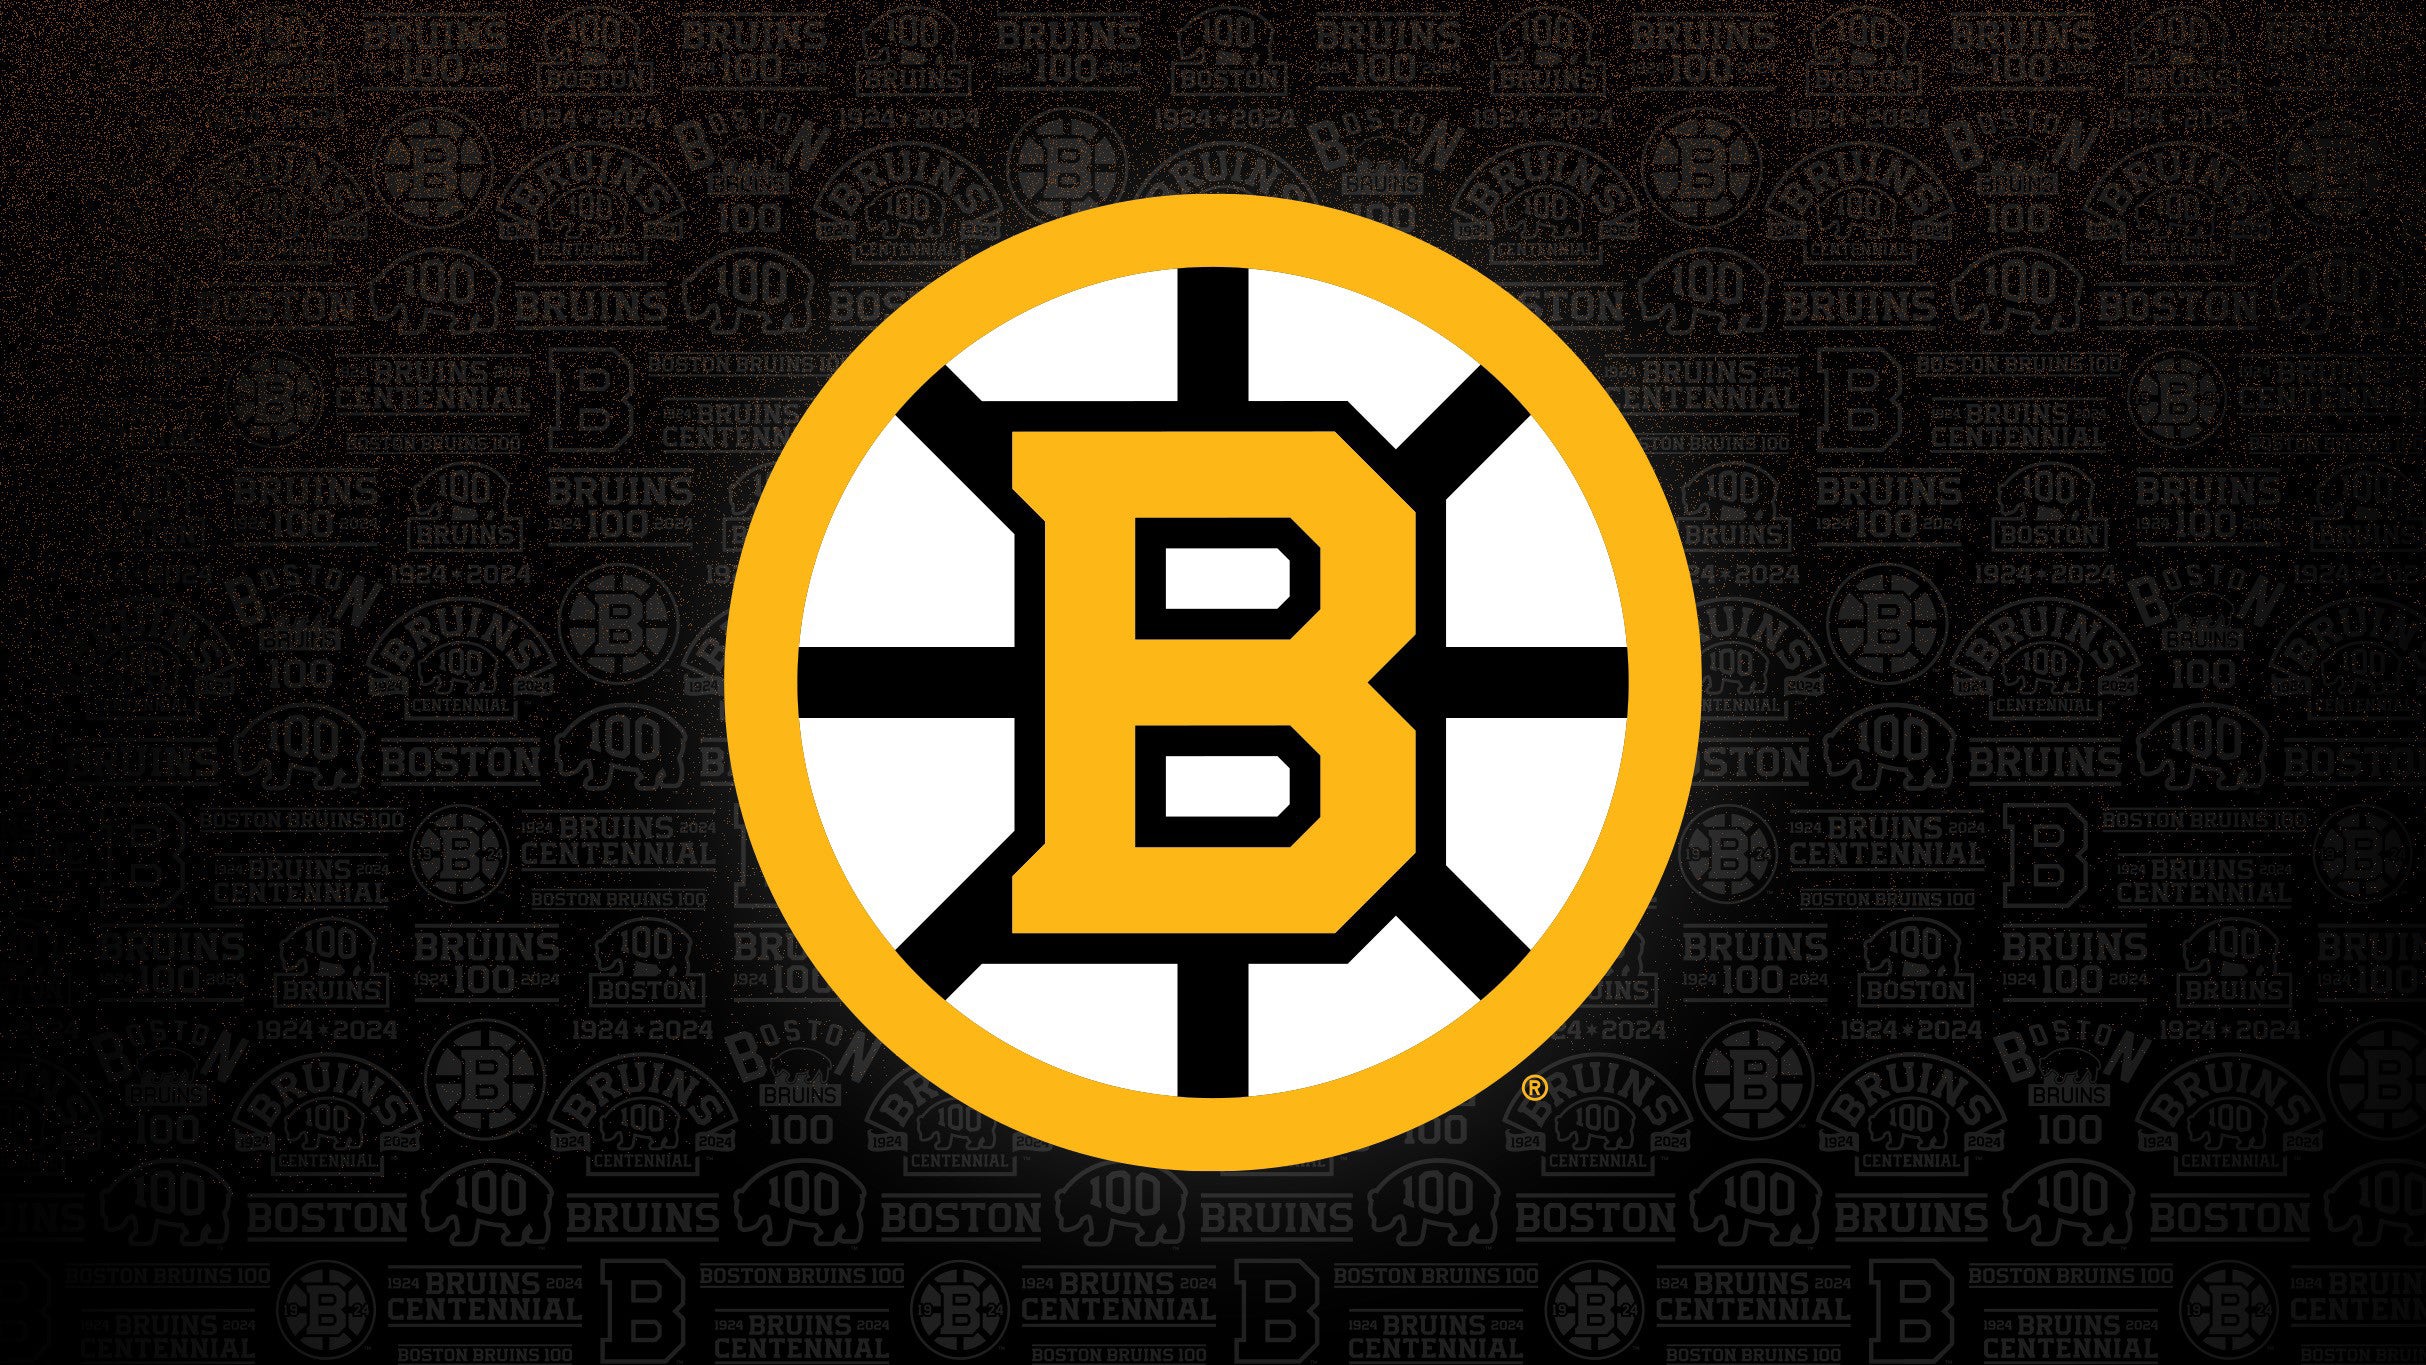 Boston Bruins vs. Vegas Golden Knights